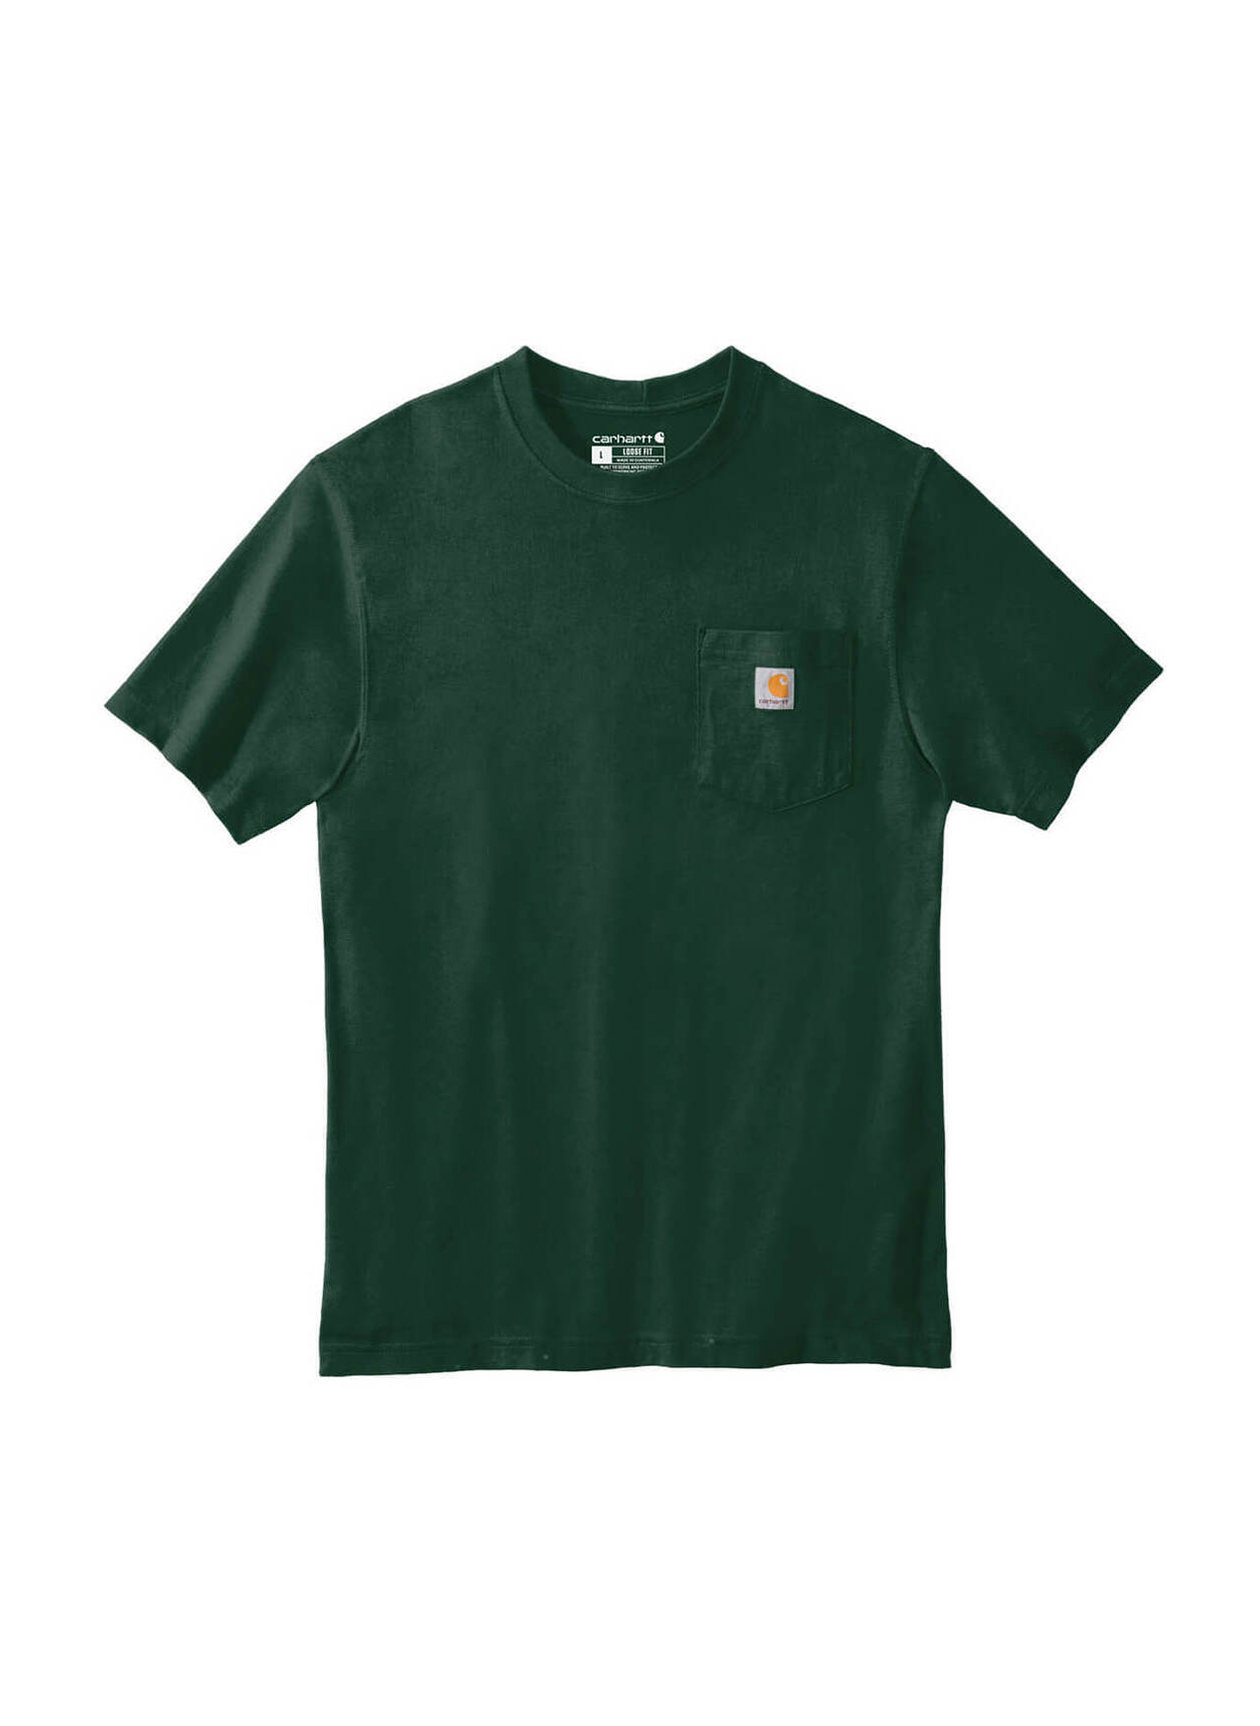 Carhartt Men's Hunter Green Workwear Pocket T-Shirt